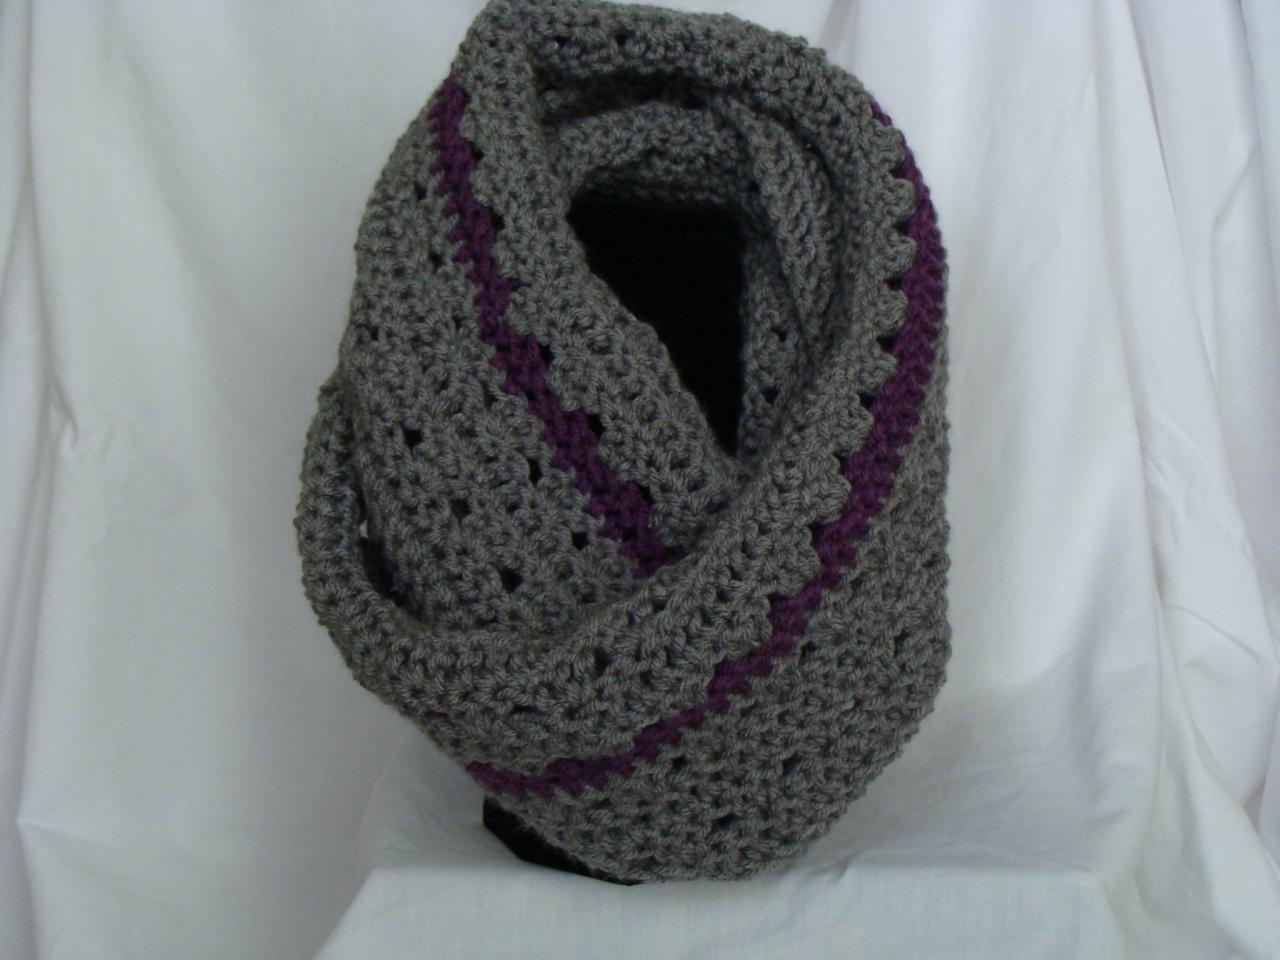 Crochet Infinity Scarf Smokey Grey And Purple Plum